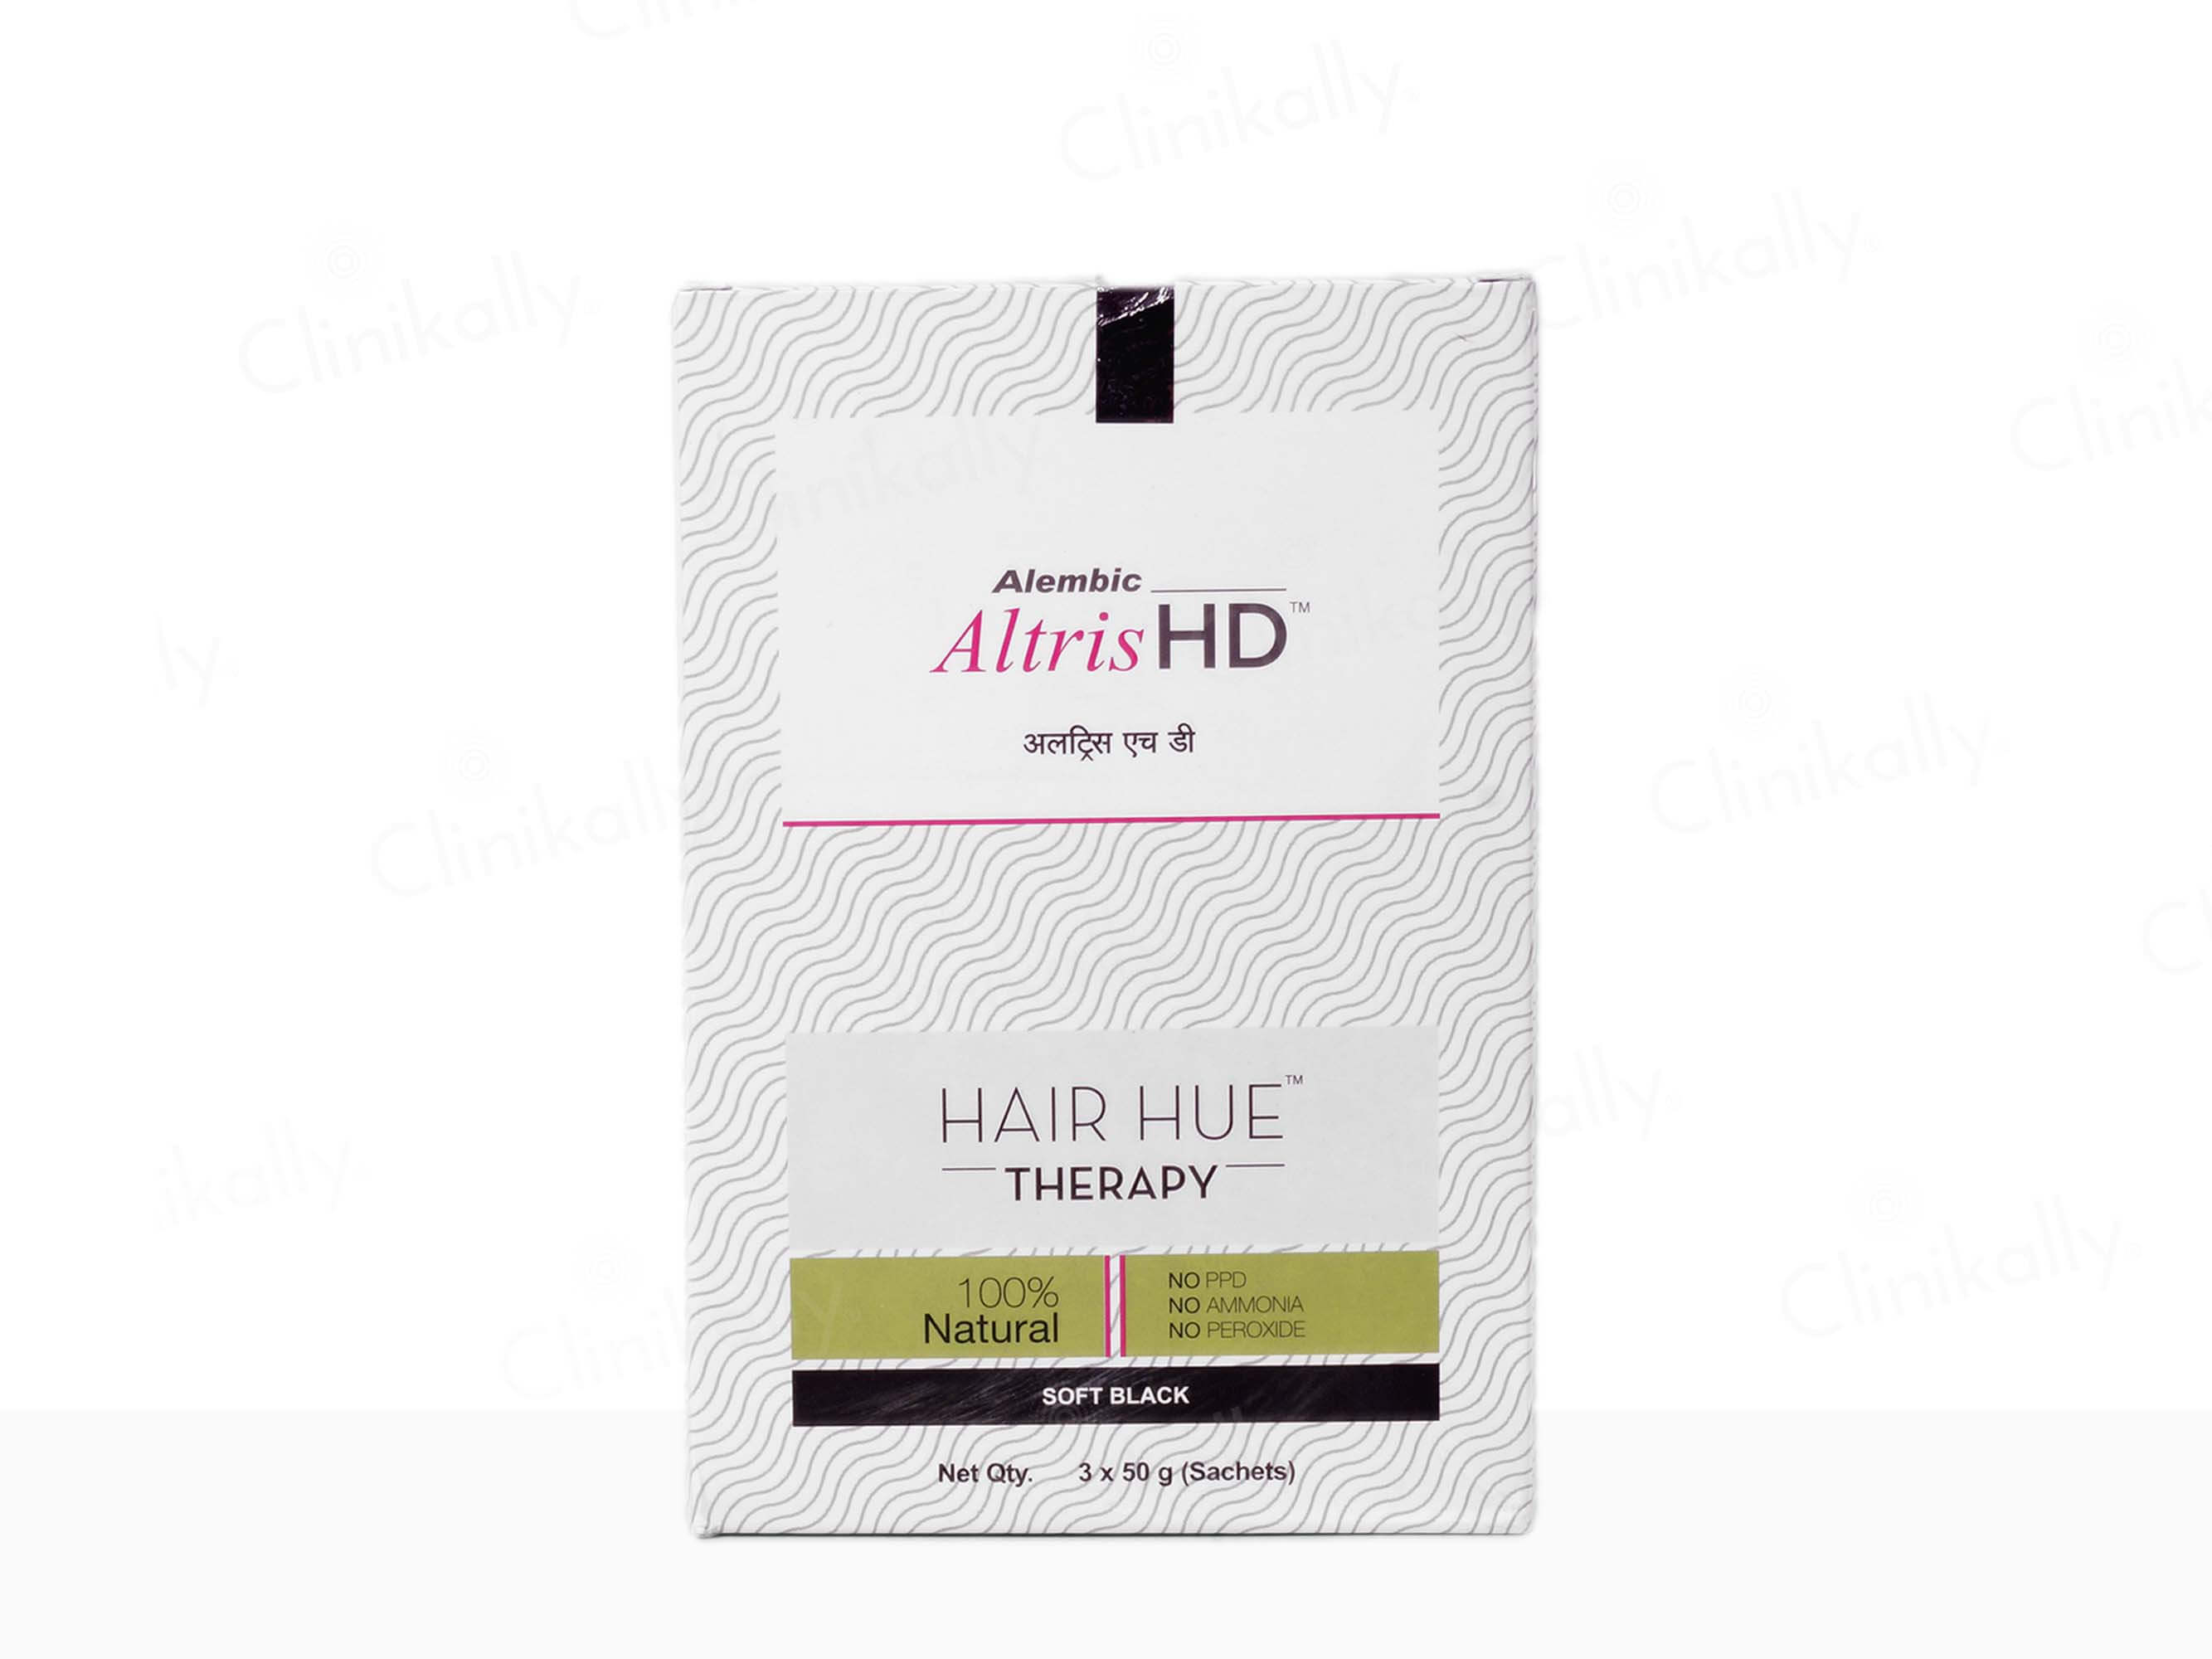 Altris HD Hair Hue Therapy Soft Black - Clinikally